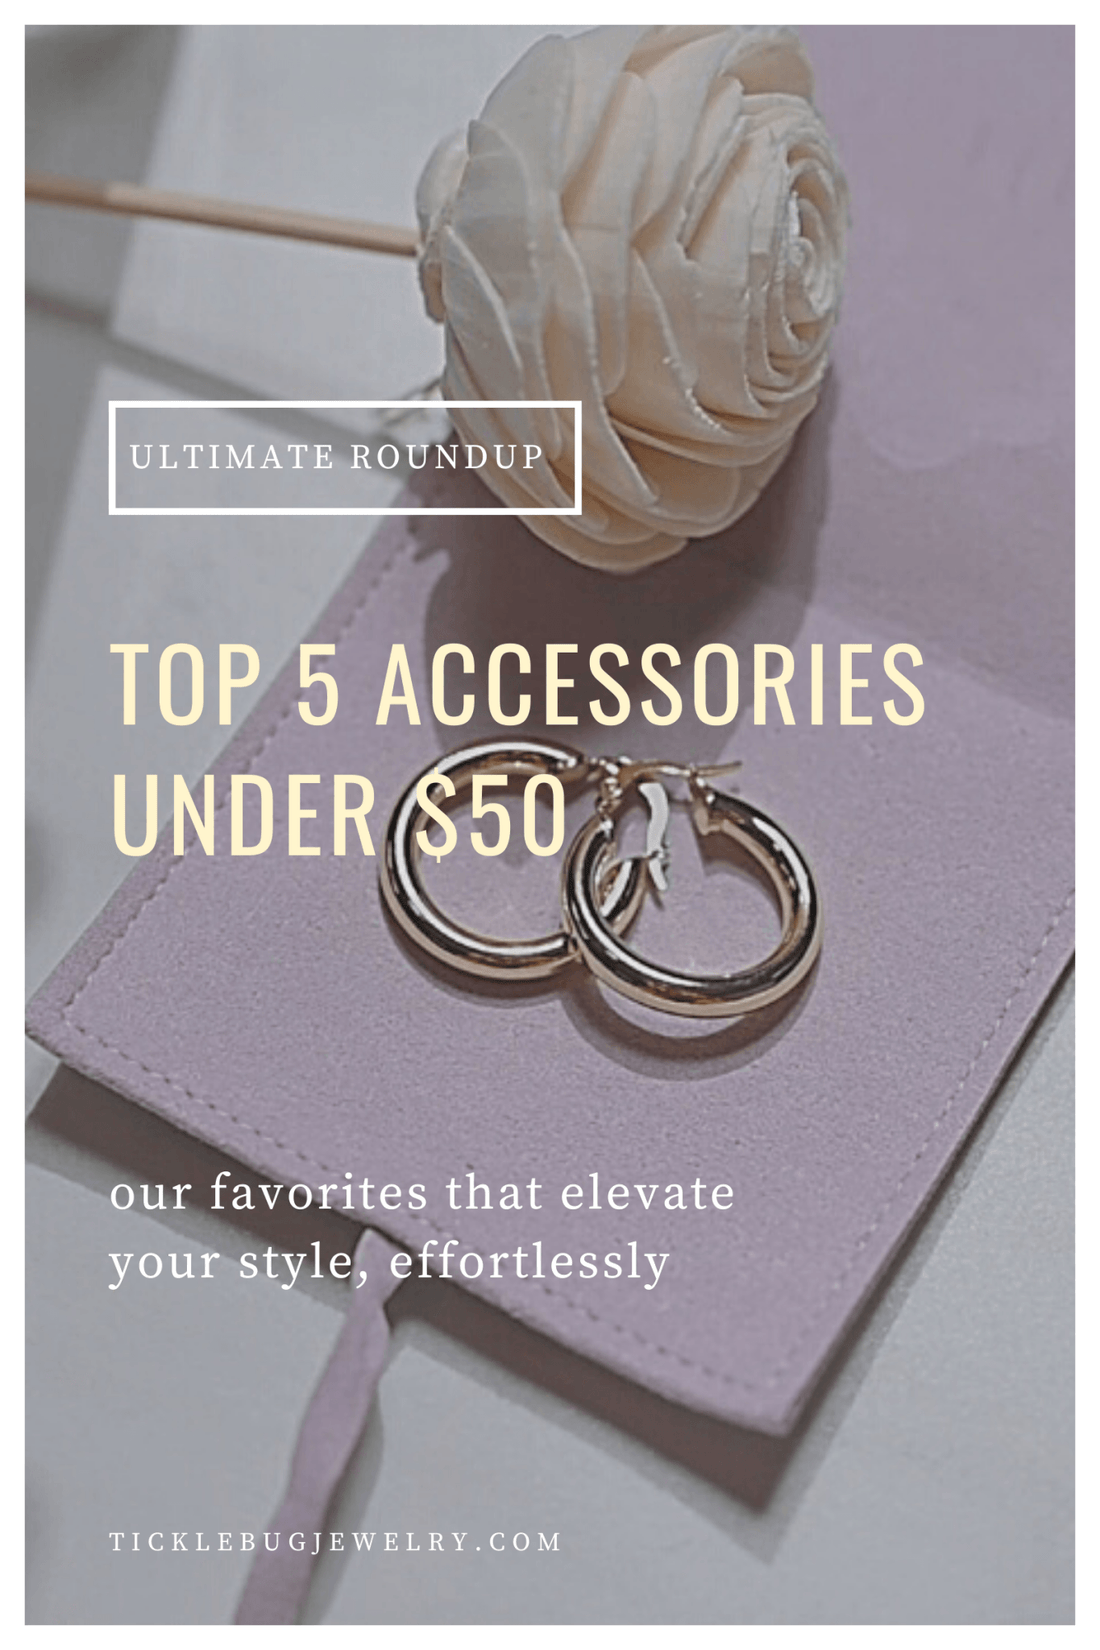 Top 5 Accessories under $50 | TickleBugJewelry